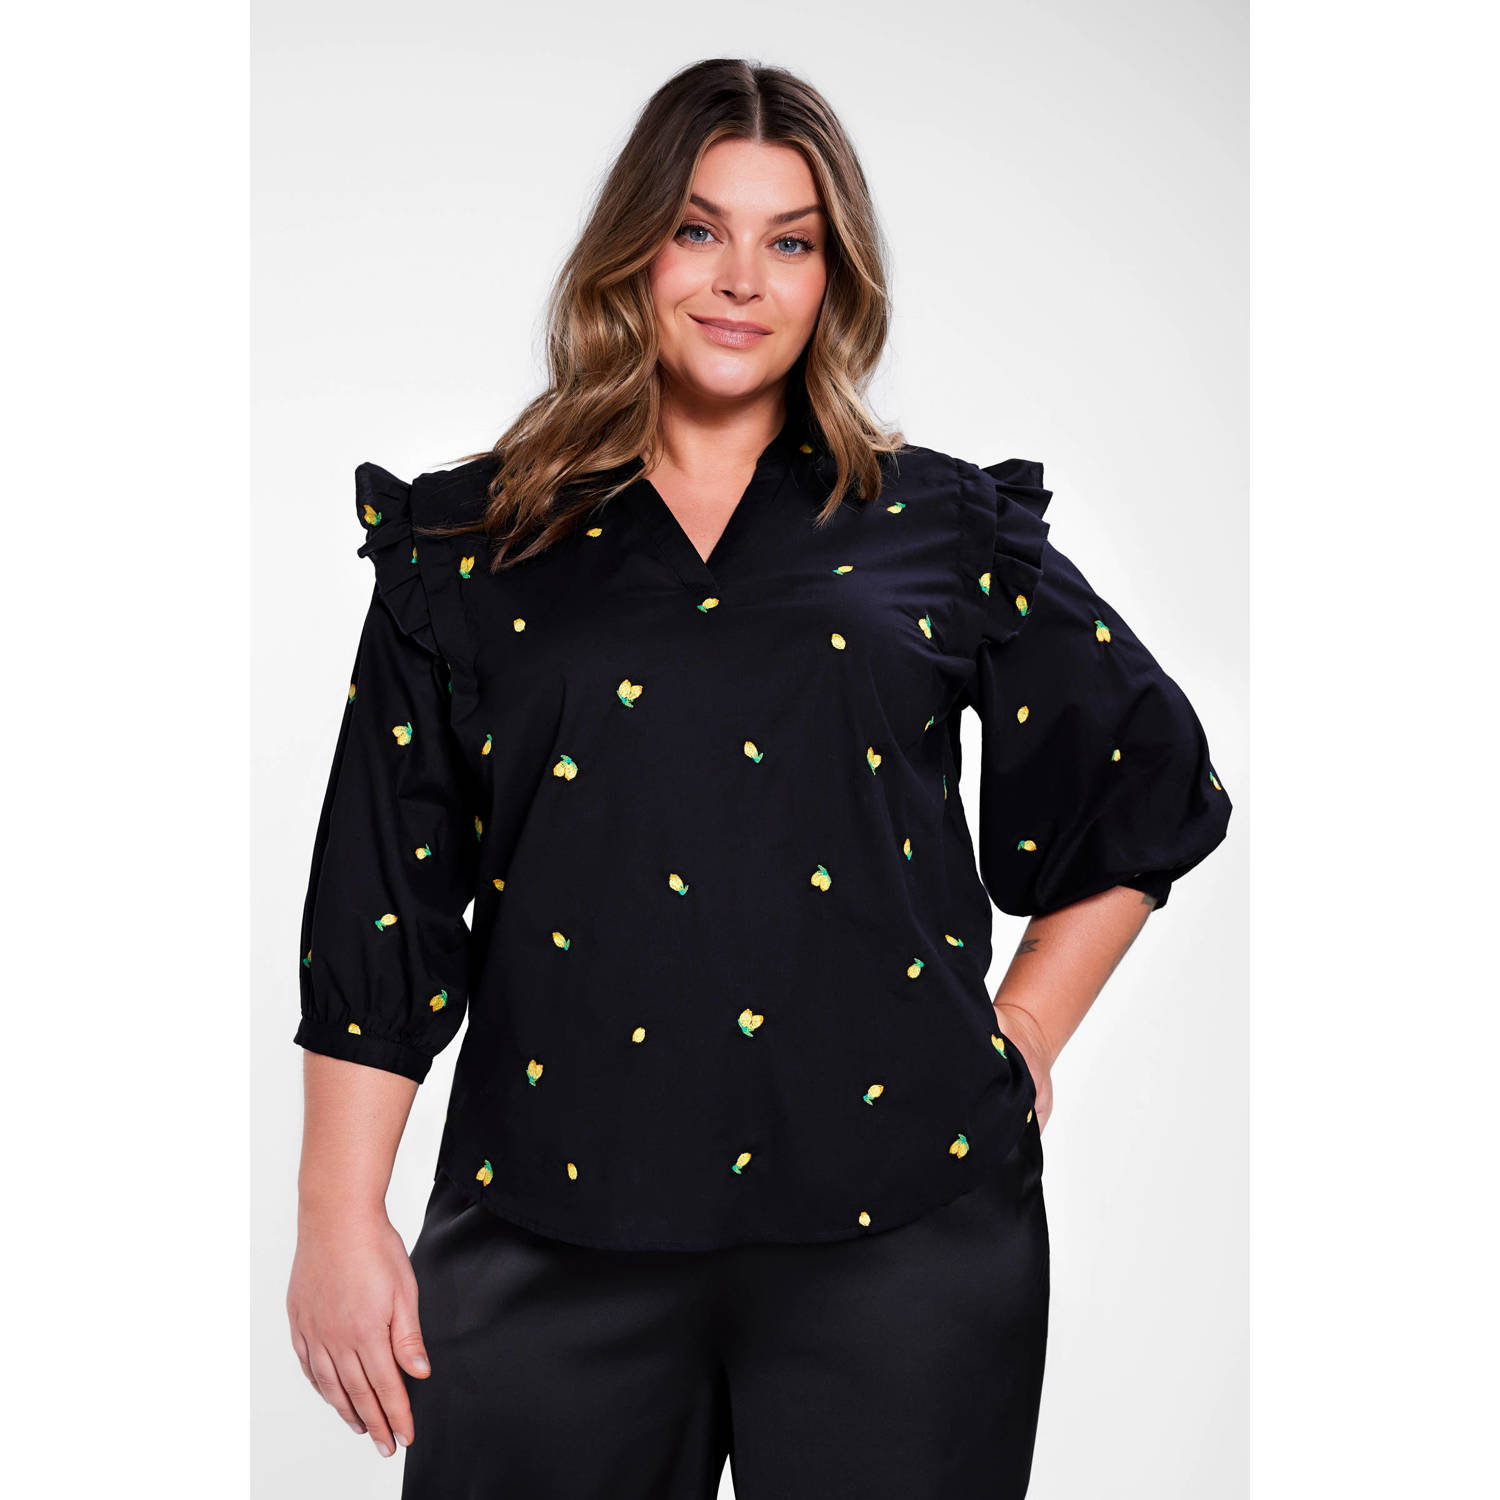 Miljuschka by Wehkamp blouse met borduursels zwart